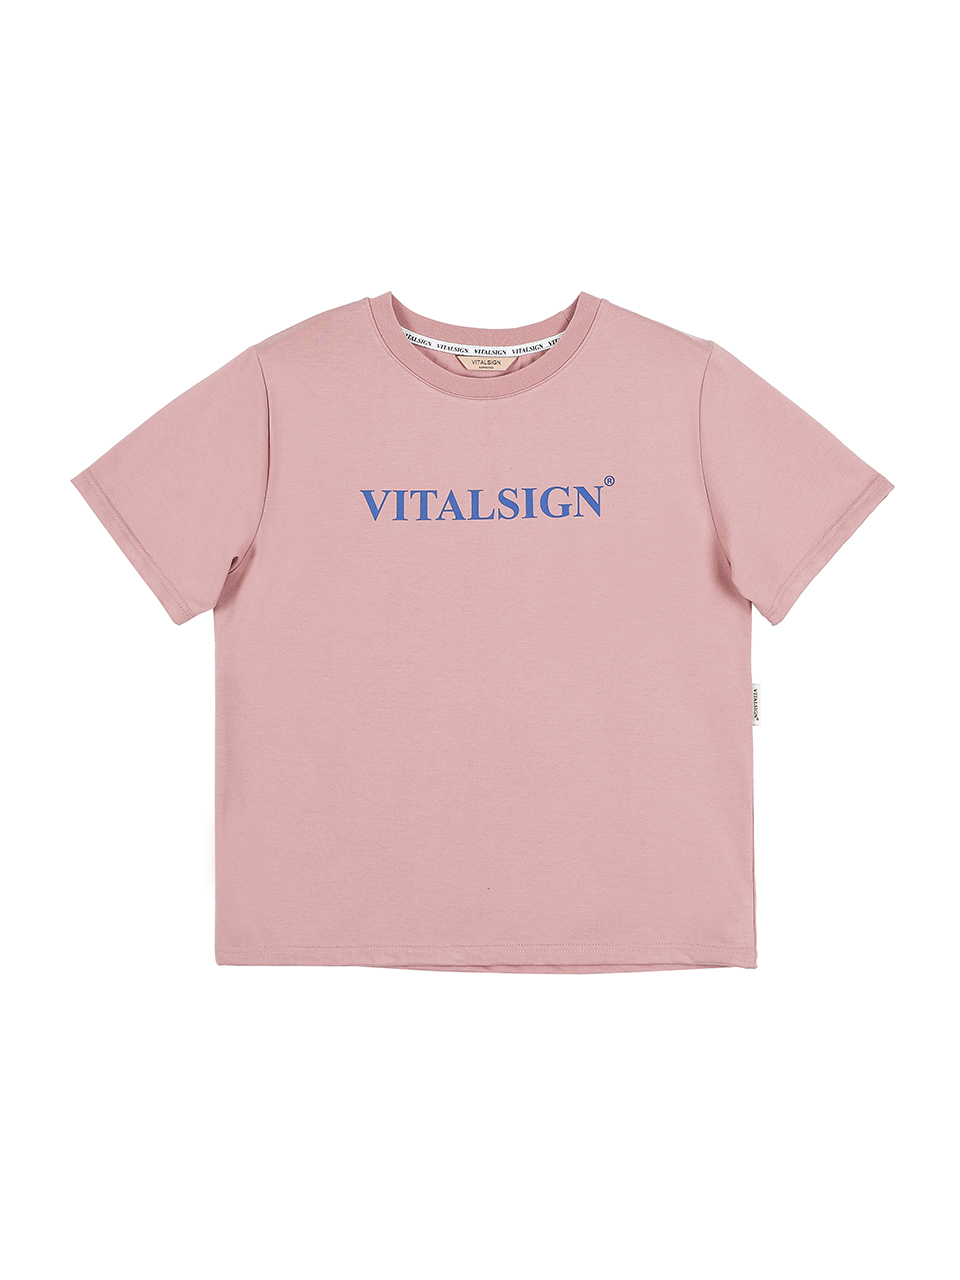 Vitalsign Signature T-shirt (Pink)